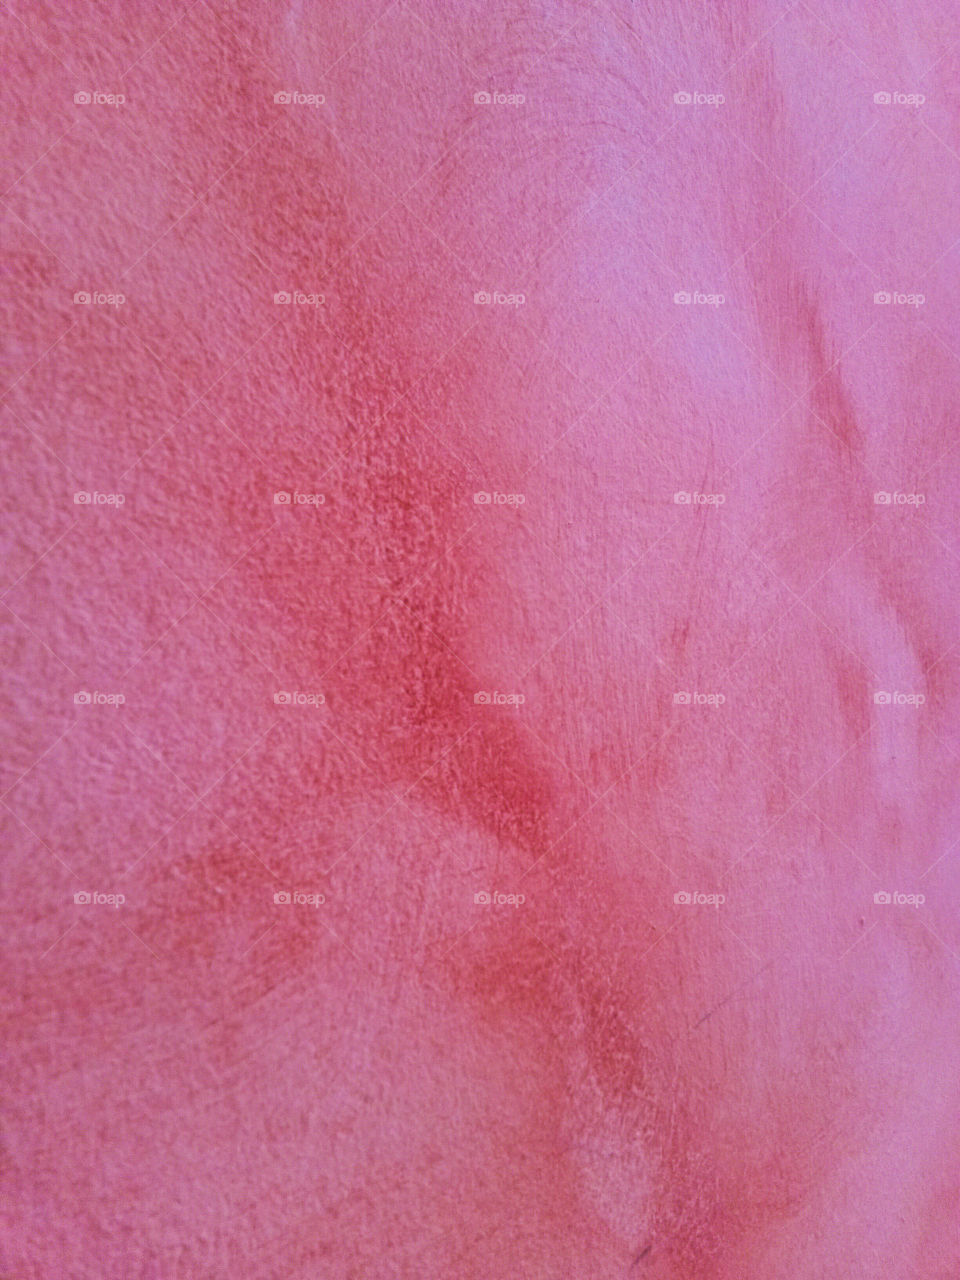 close up of pink wall